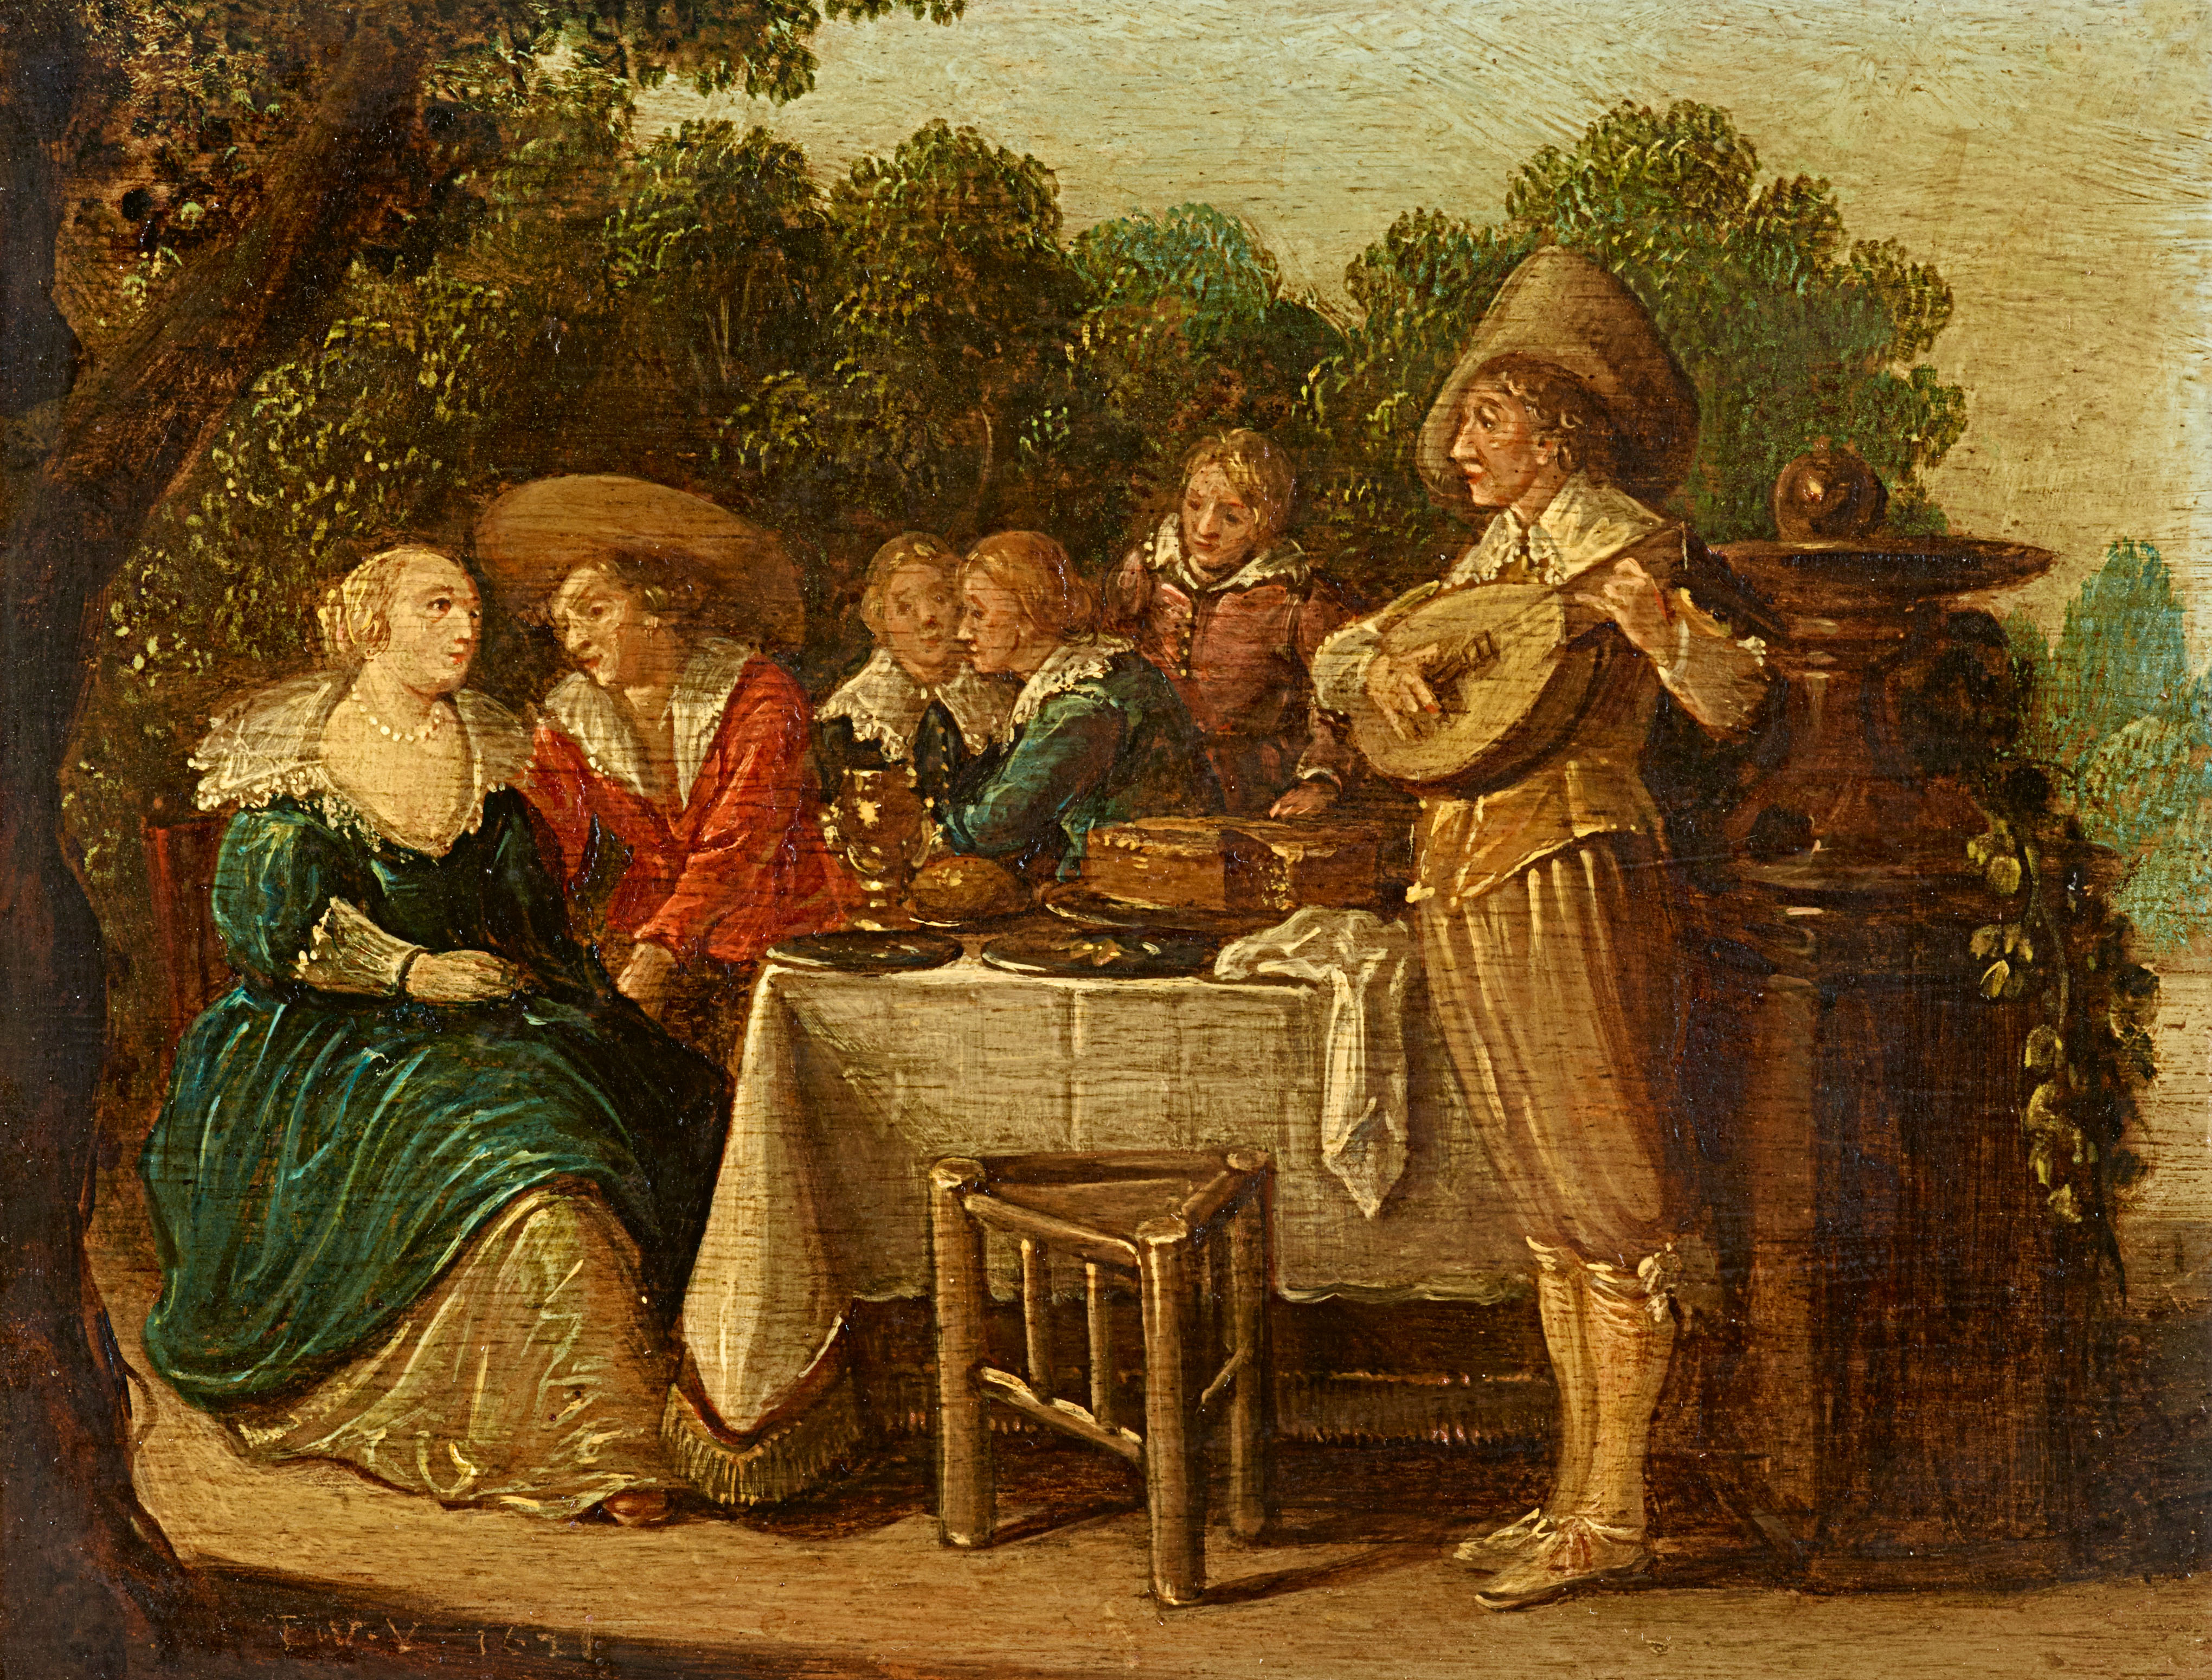 Esaias van de Velde, attributed to - Merry Company in the Open Air - image-1